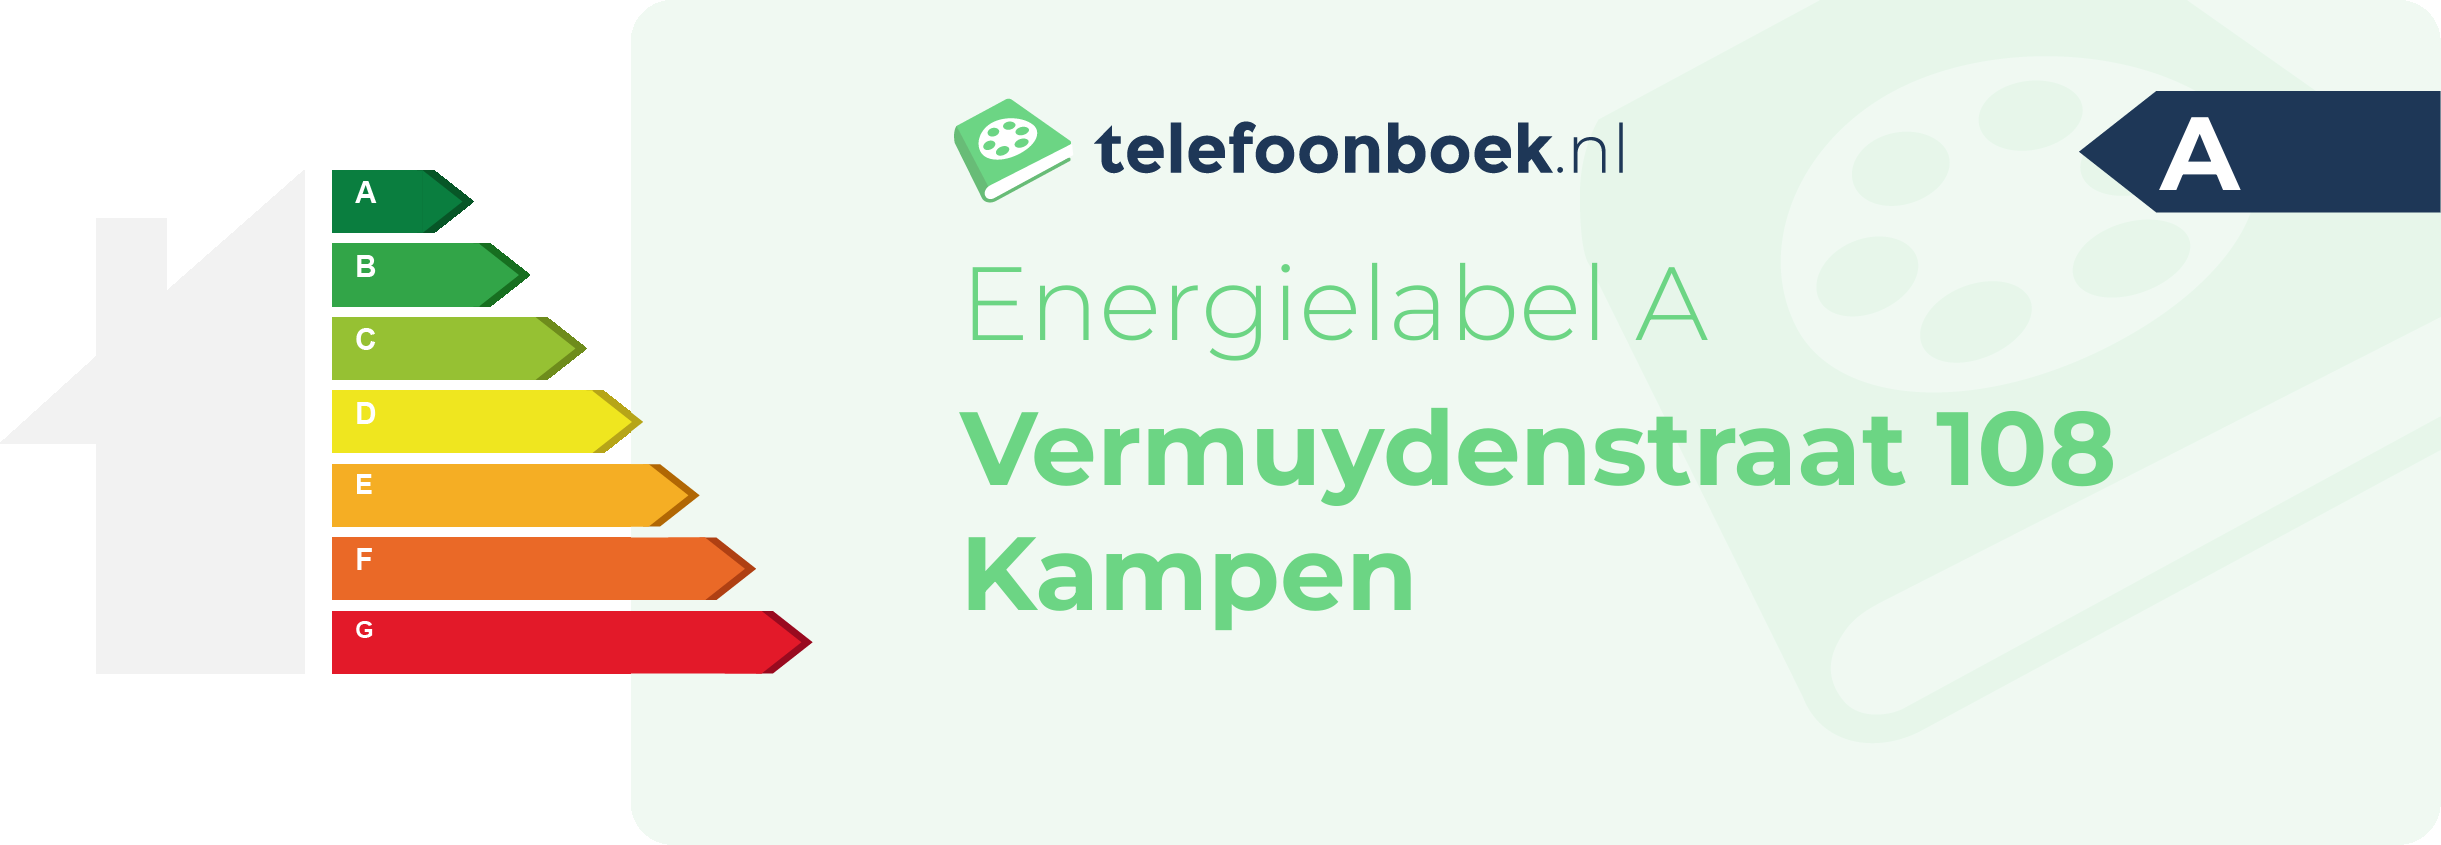 Energielabel Vermuydenstraat 108 Kampen